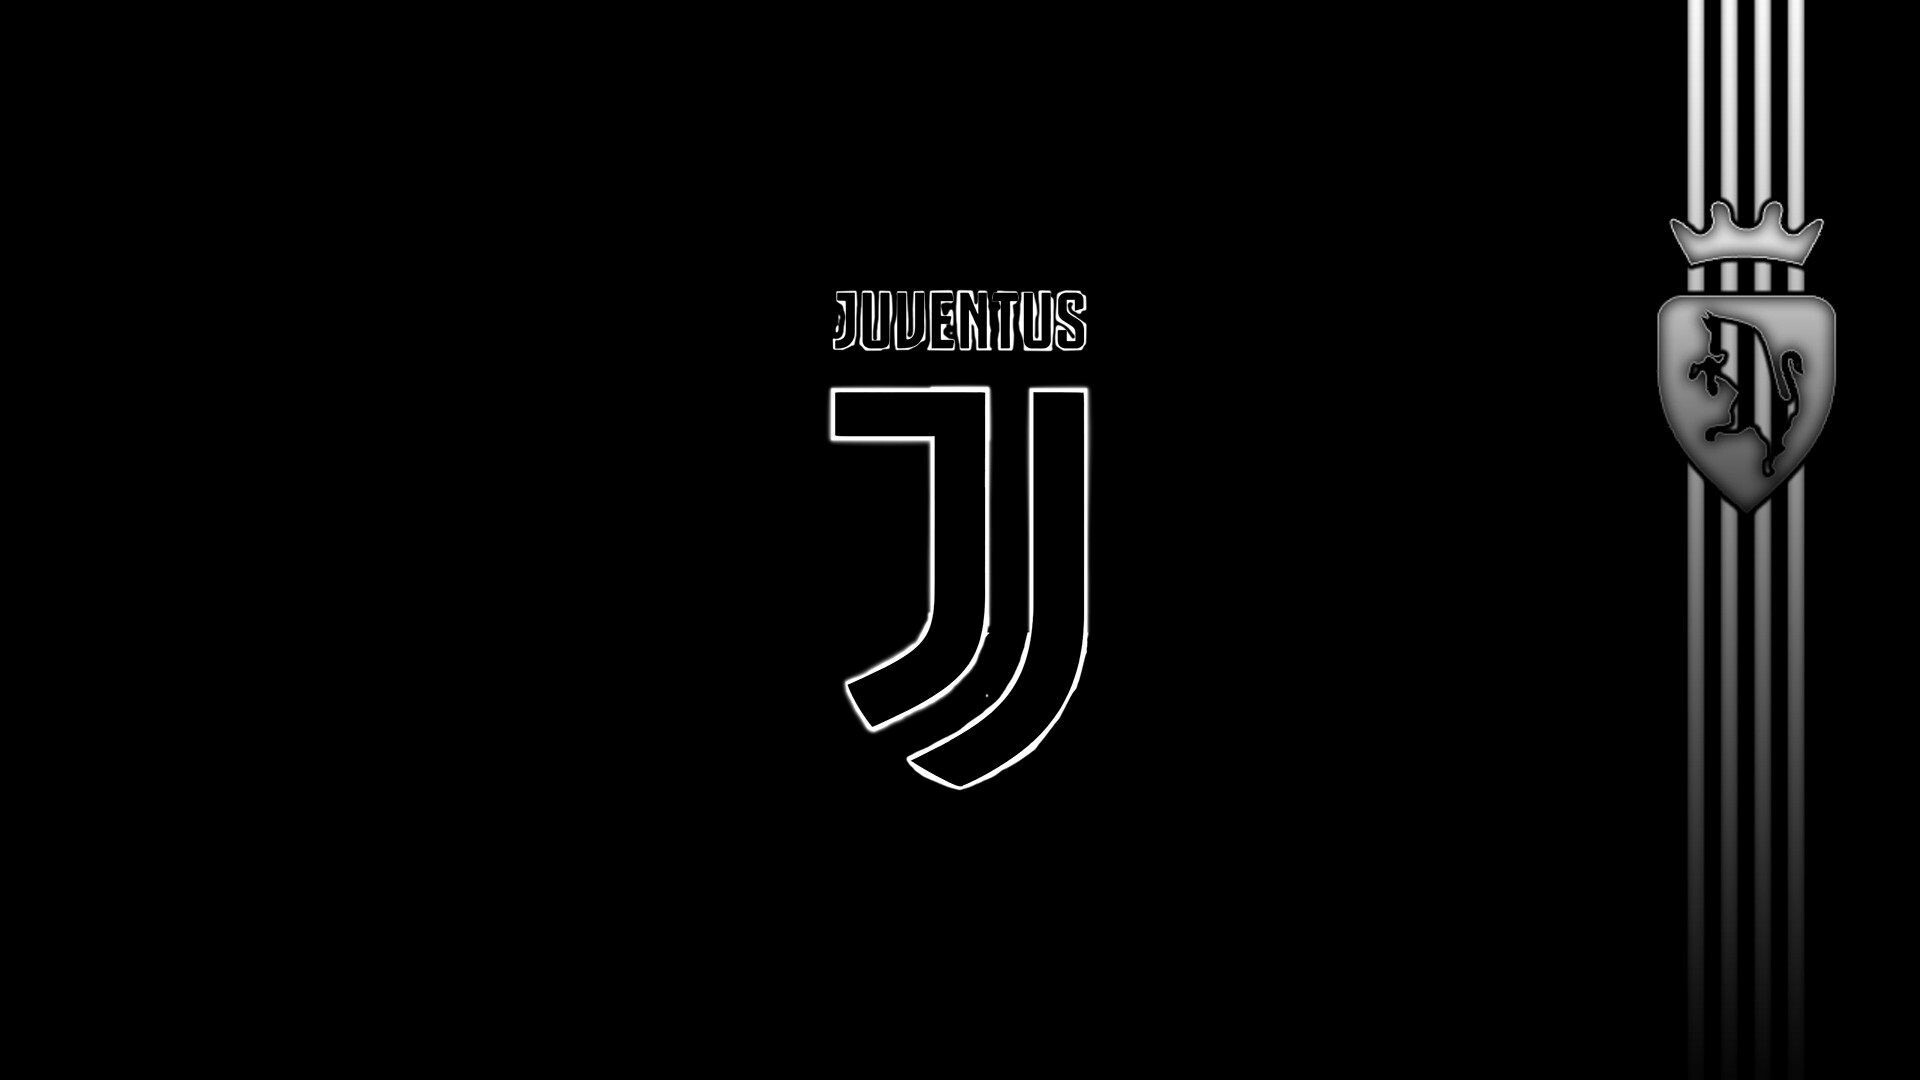 Forza Juve, Juventus logo, High-resolution wallpapers, Iconic emblem, 1920x1080 Full HD Desktop